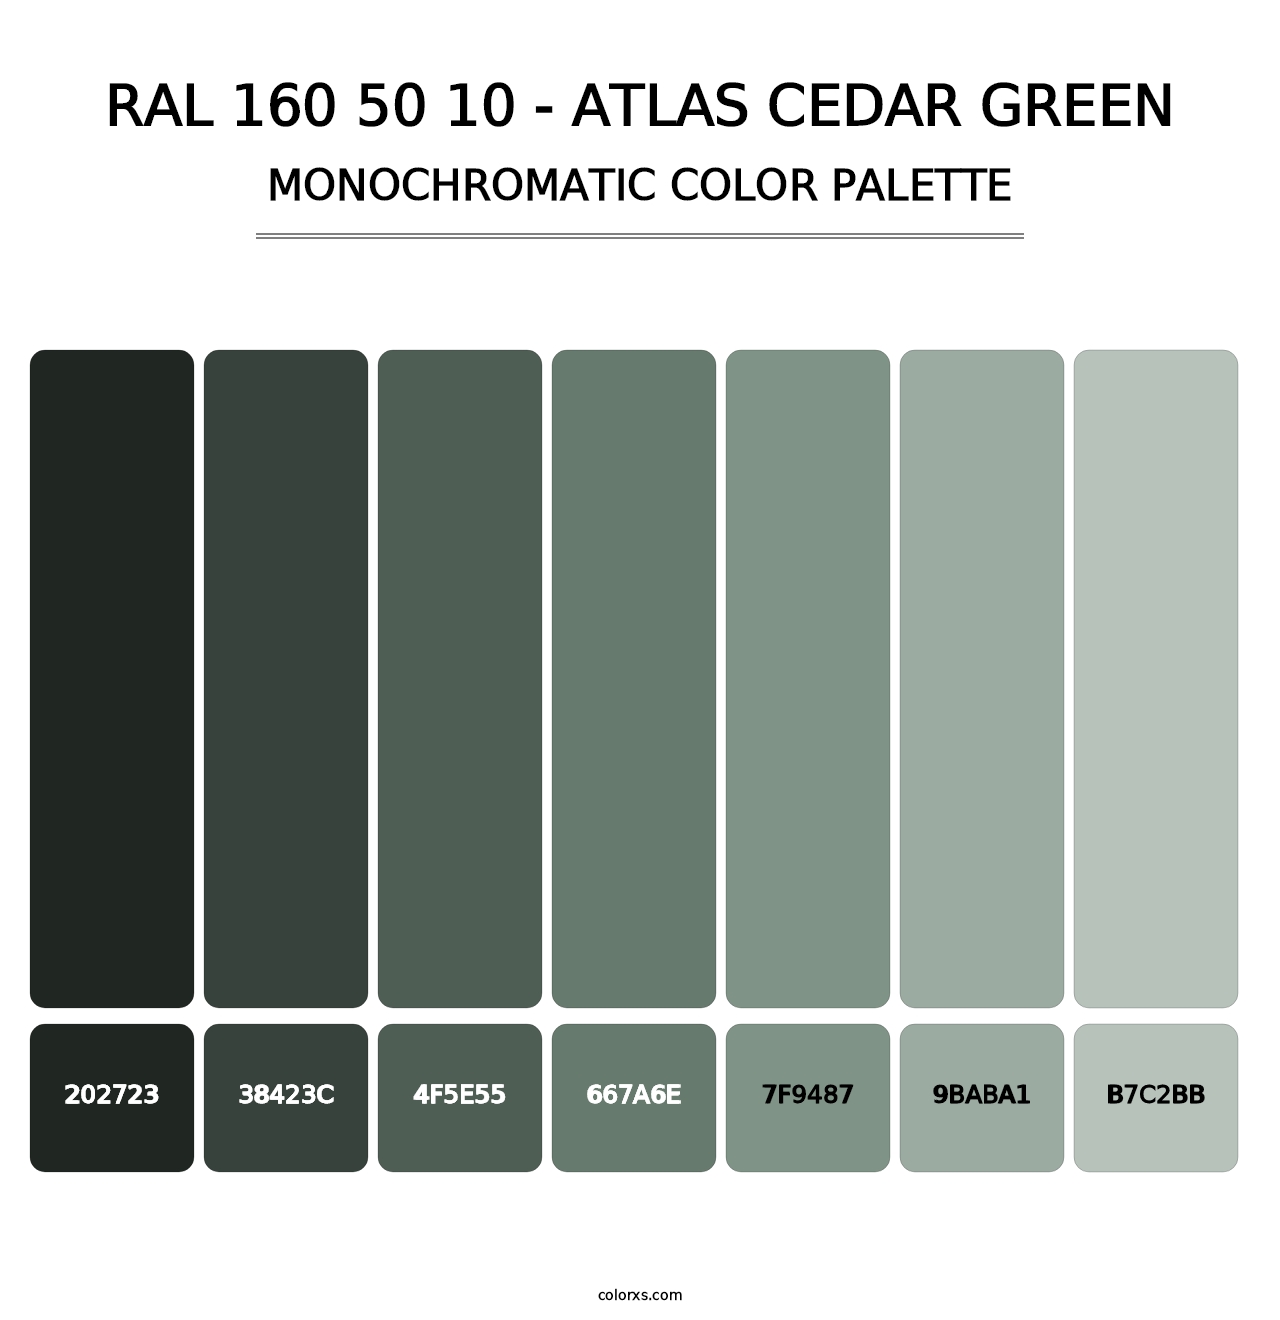 RAL 160 50 10 - Atlas Cedar Green - Monochromatic Color Palette